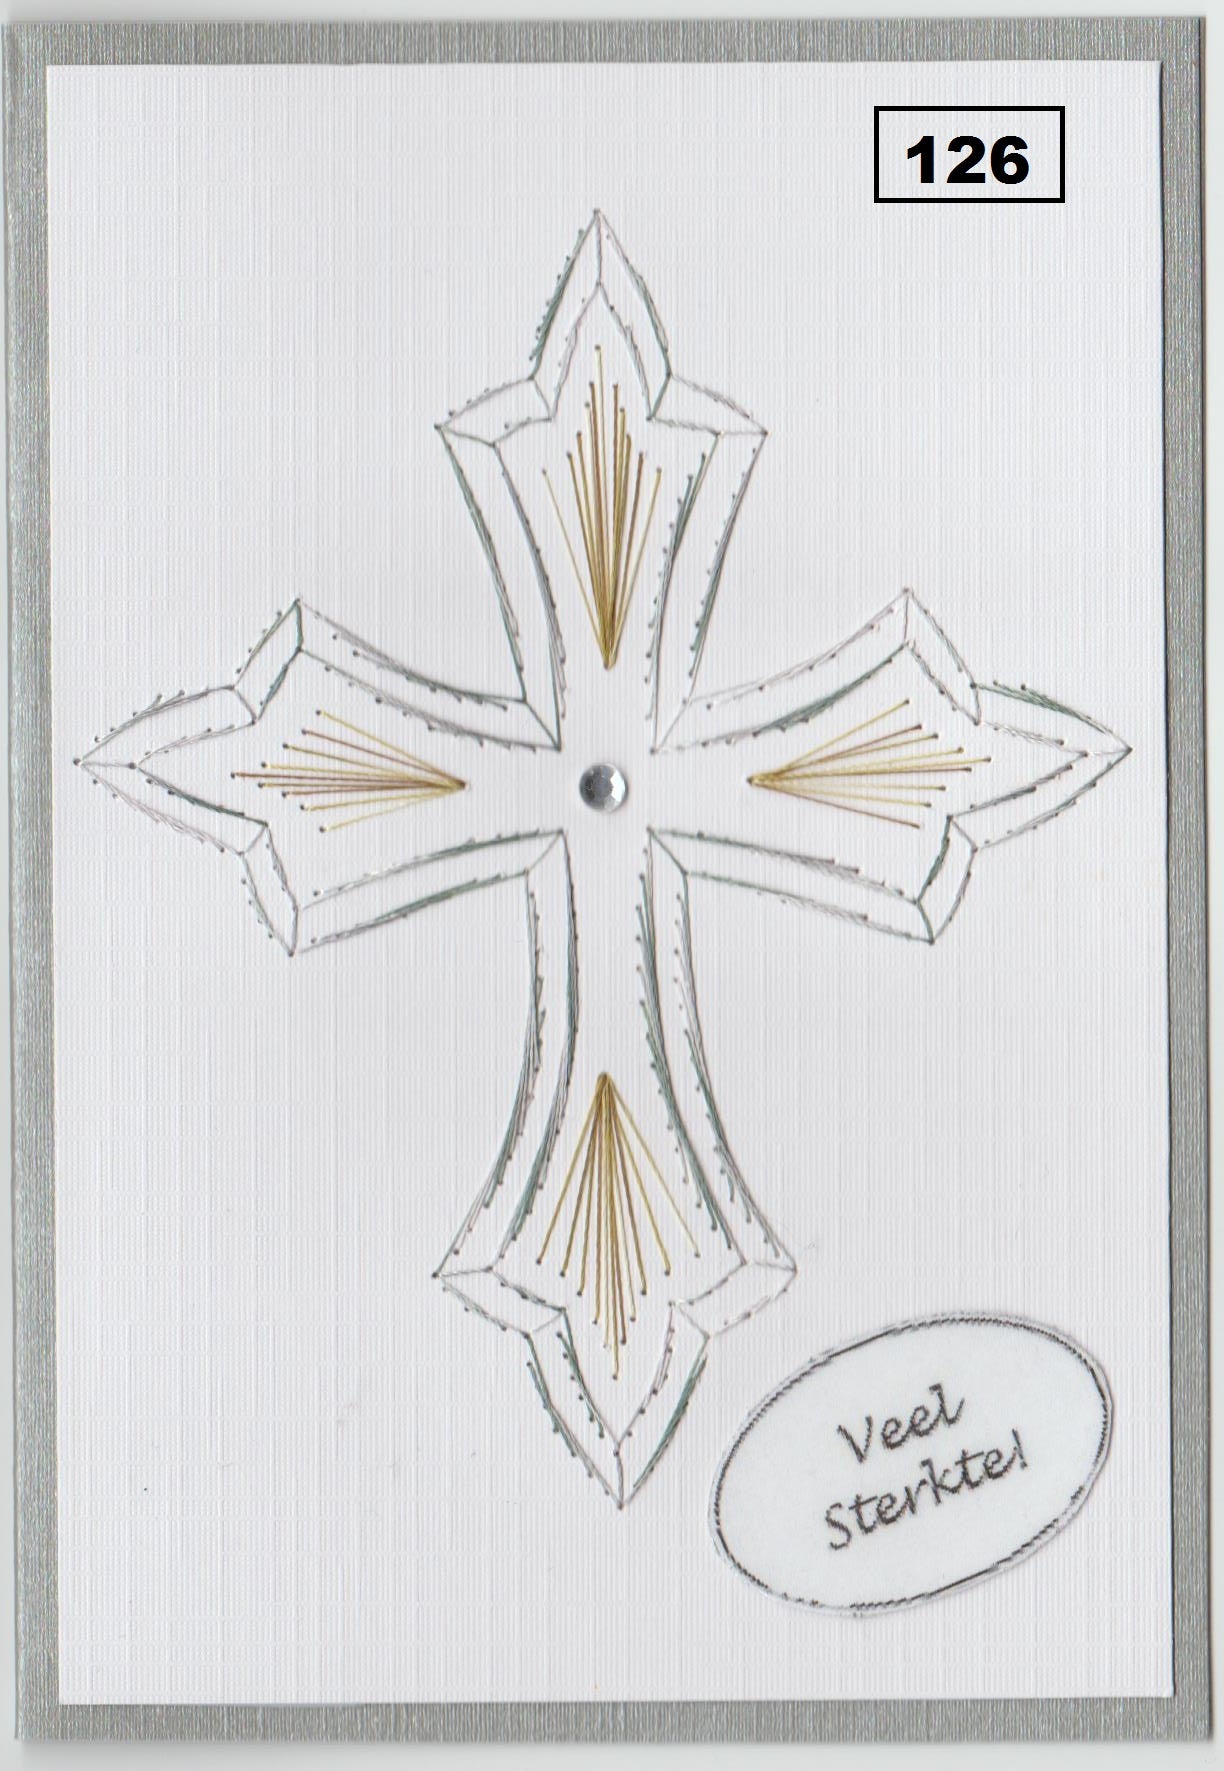 Laura's Design Digital Embroidery Pattern - Ornate Cross